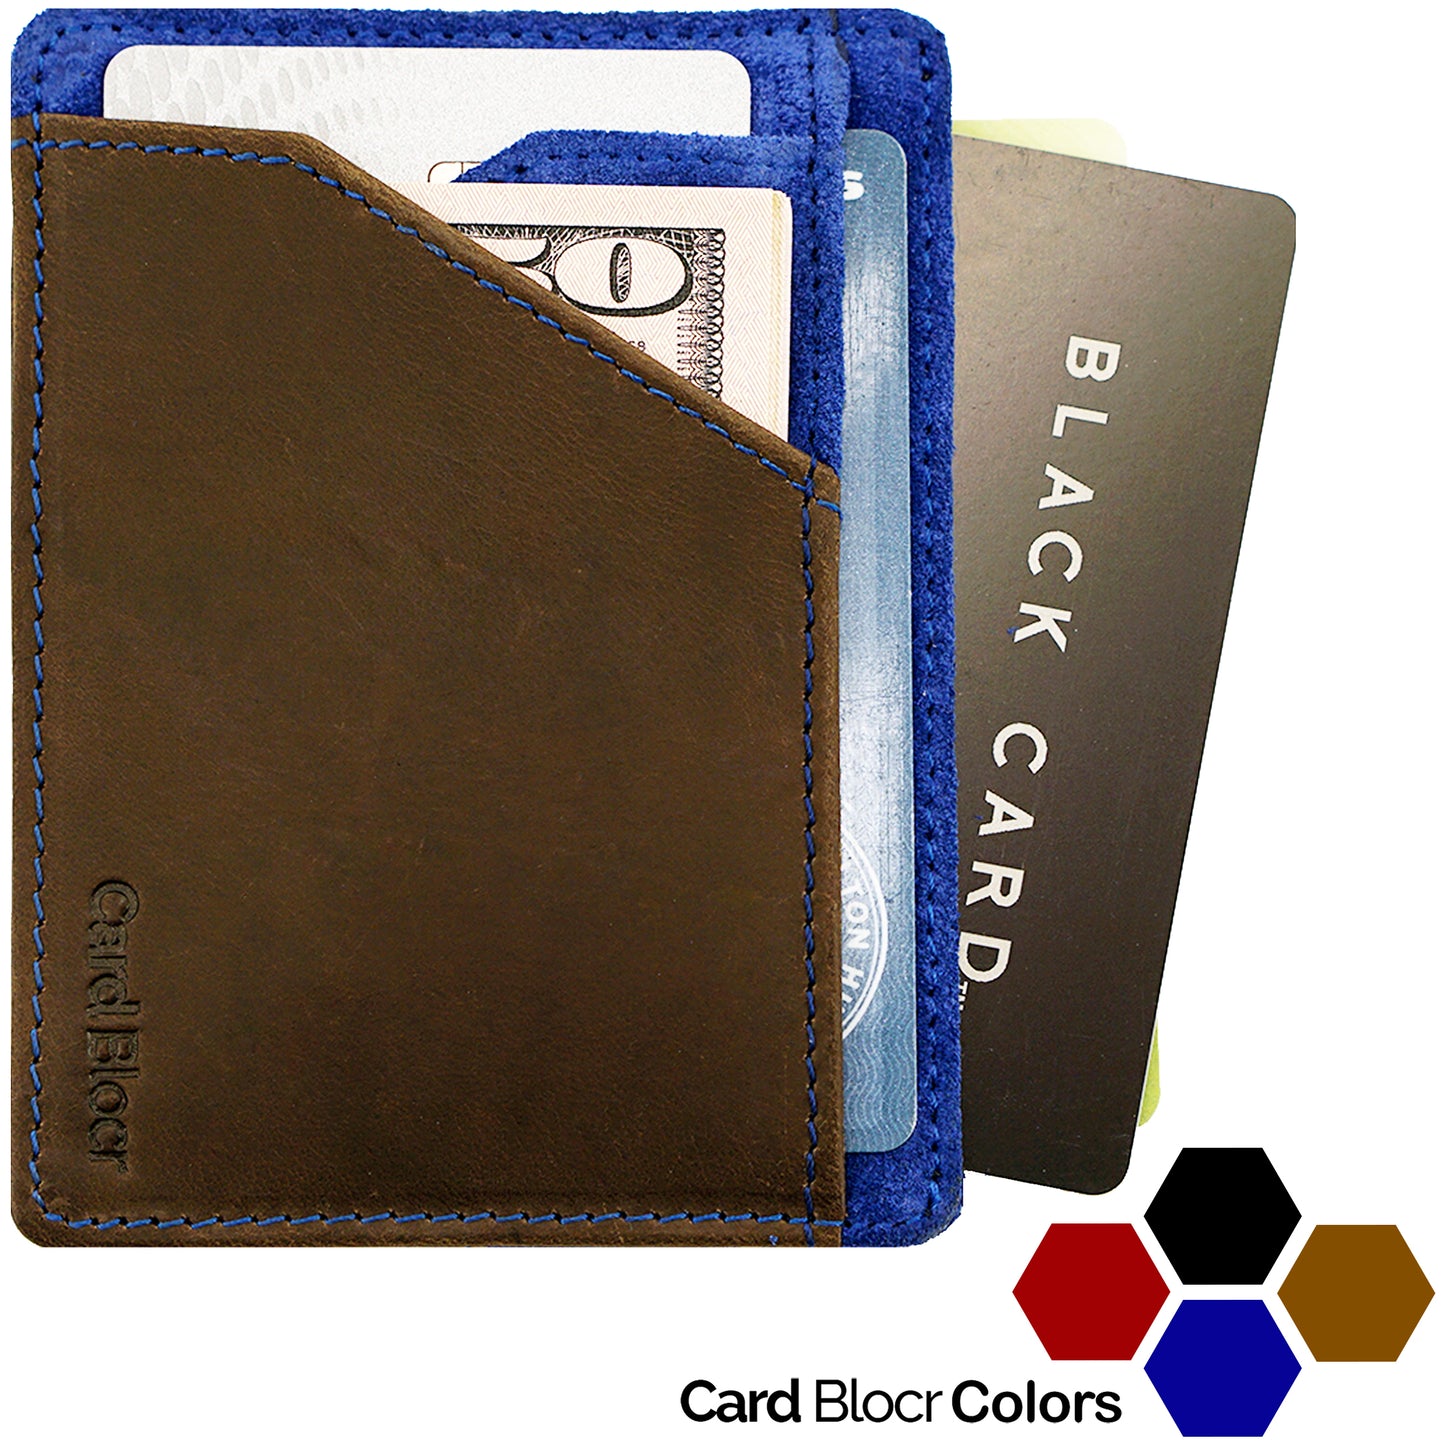 Card Blocr Minimalist Wallet in Brown Leather & Blue Suede | RFID Blocking Wallet